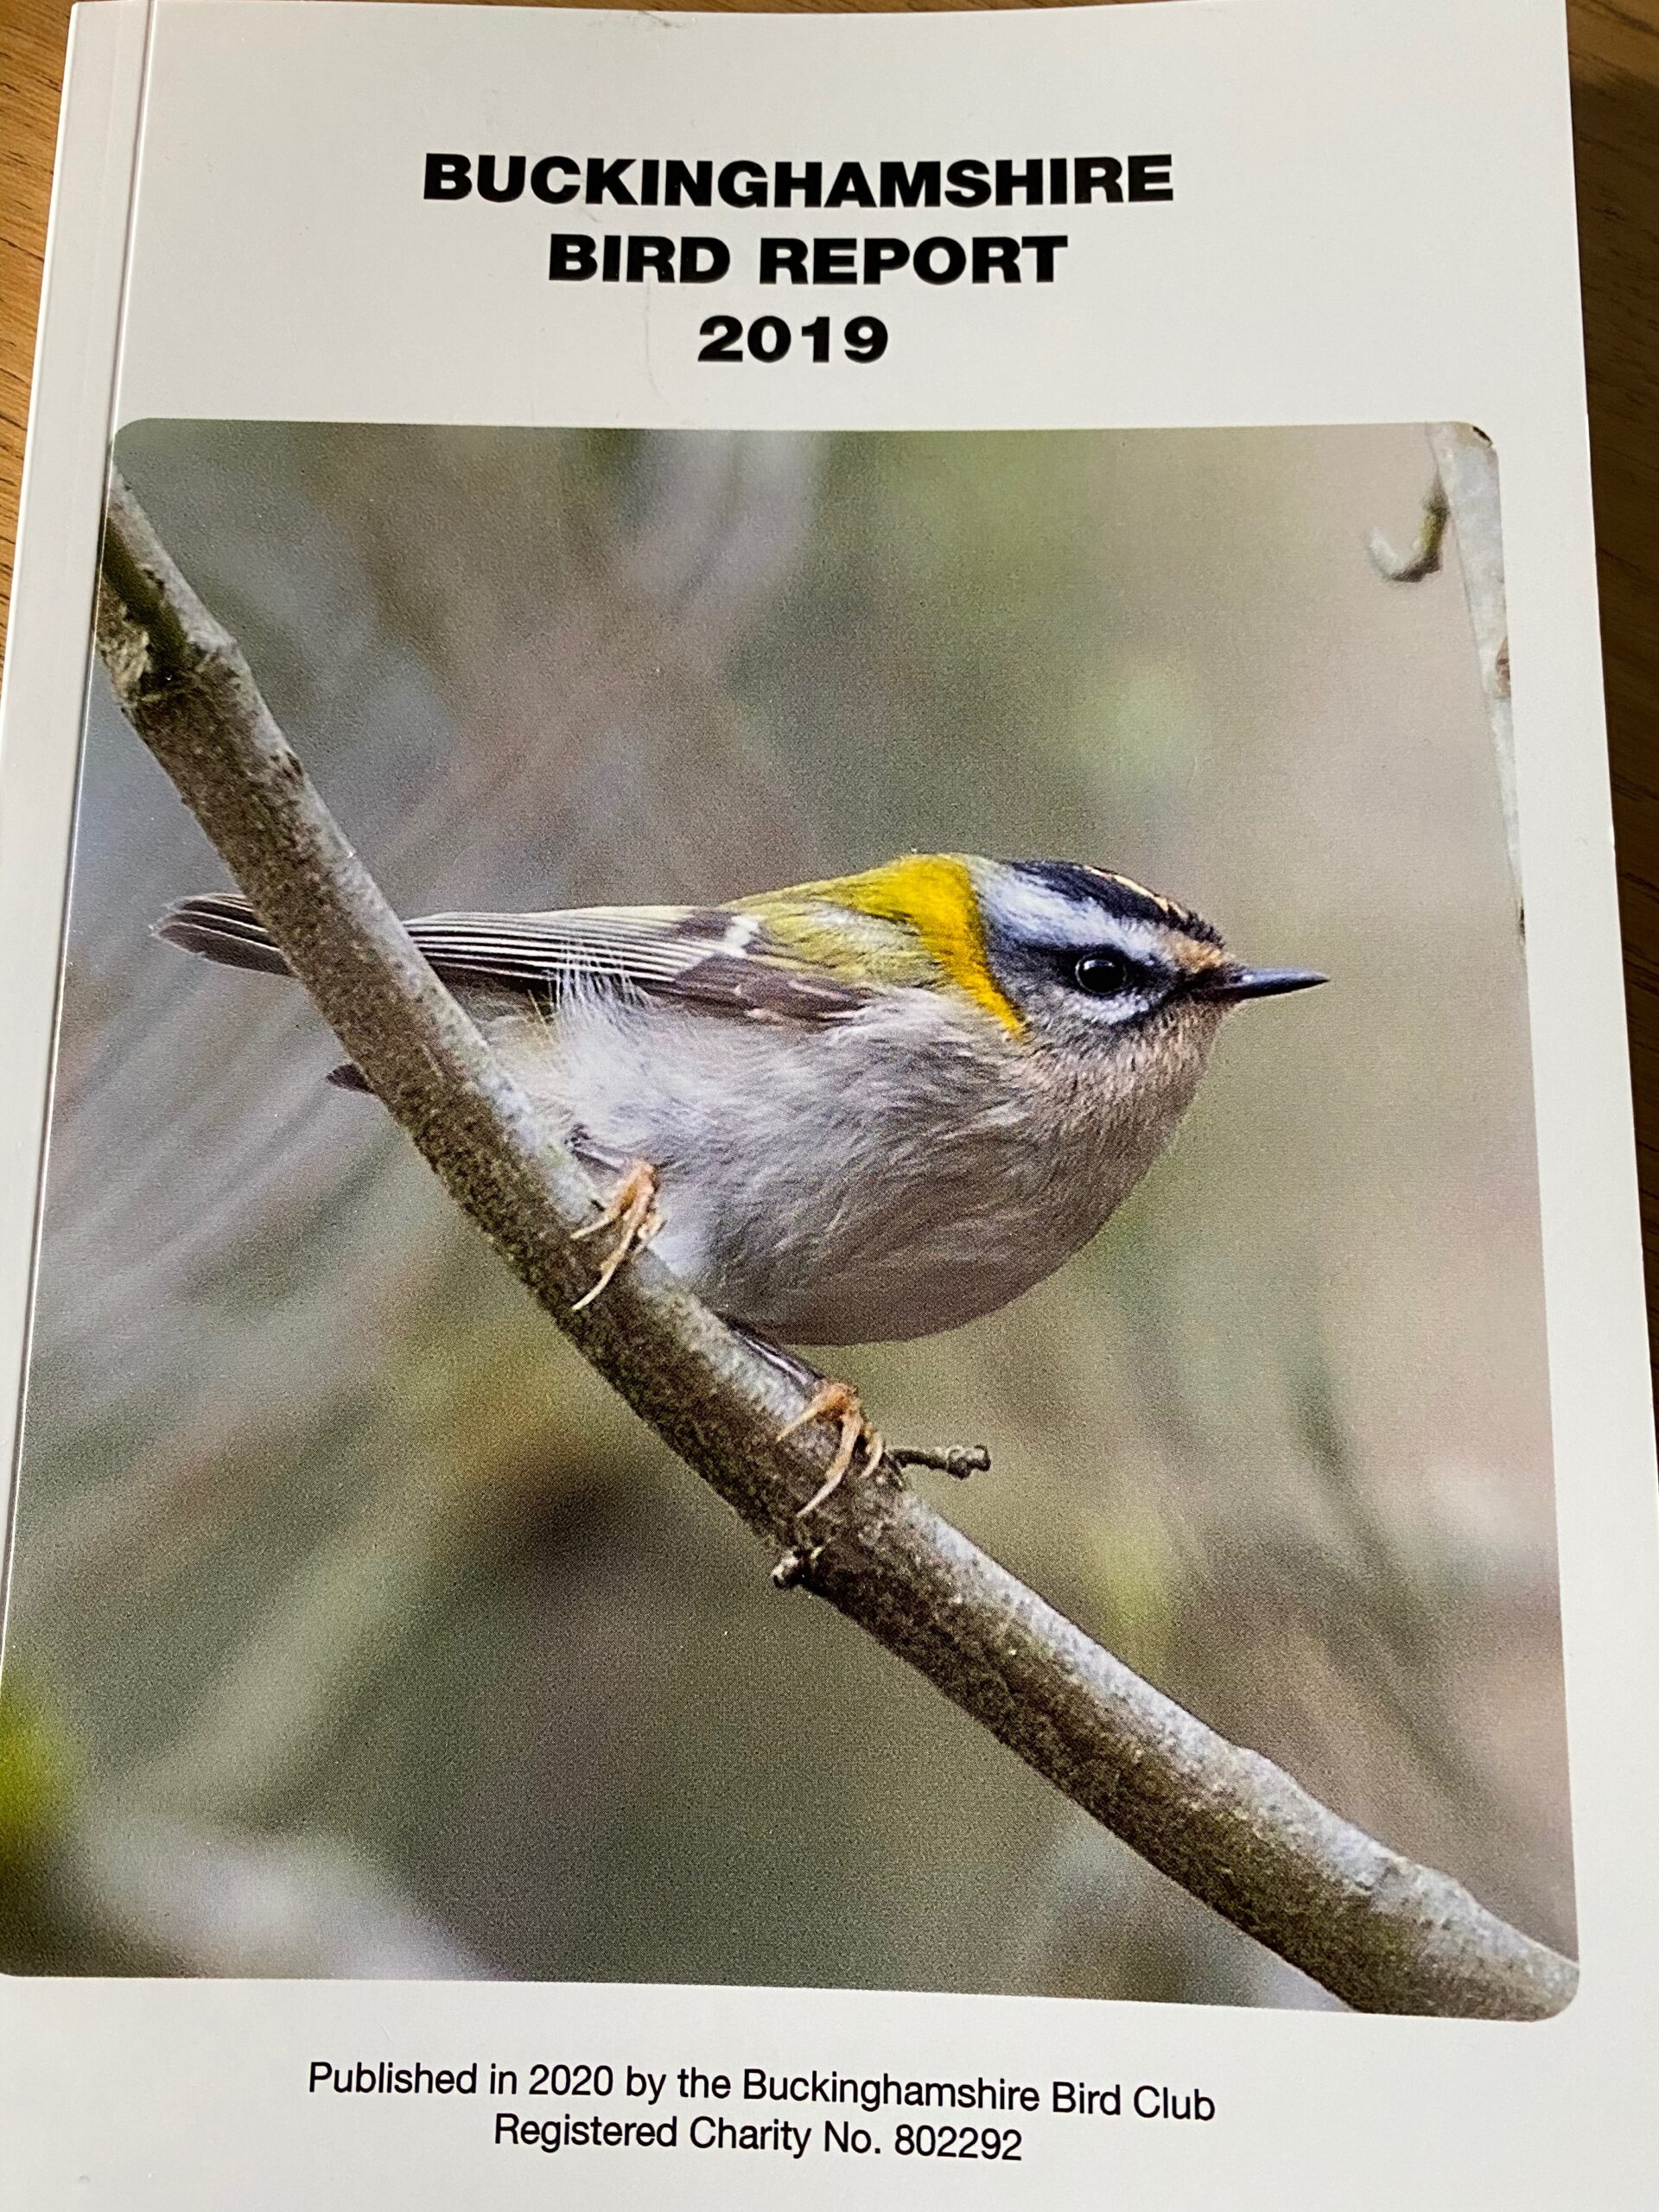 Bucks bird club annual report 2019 cover